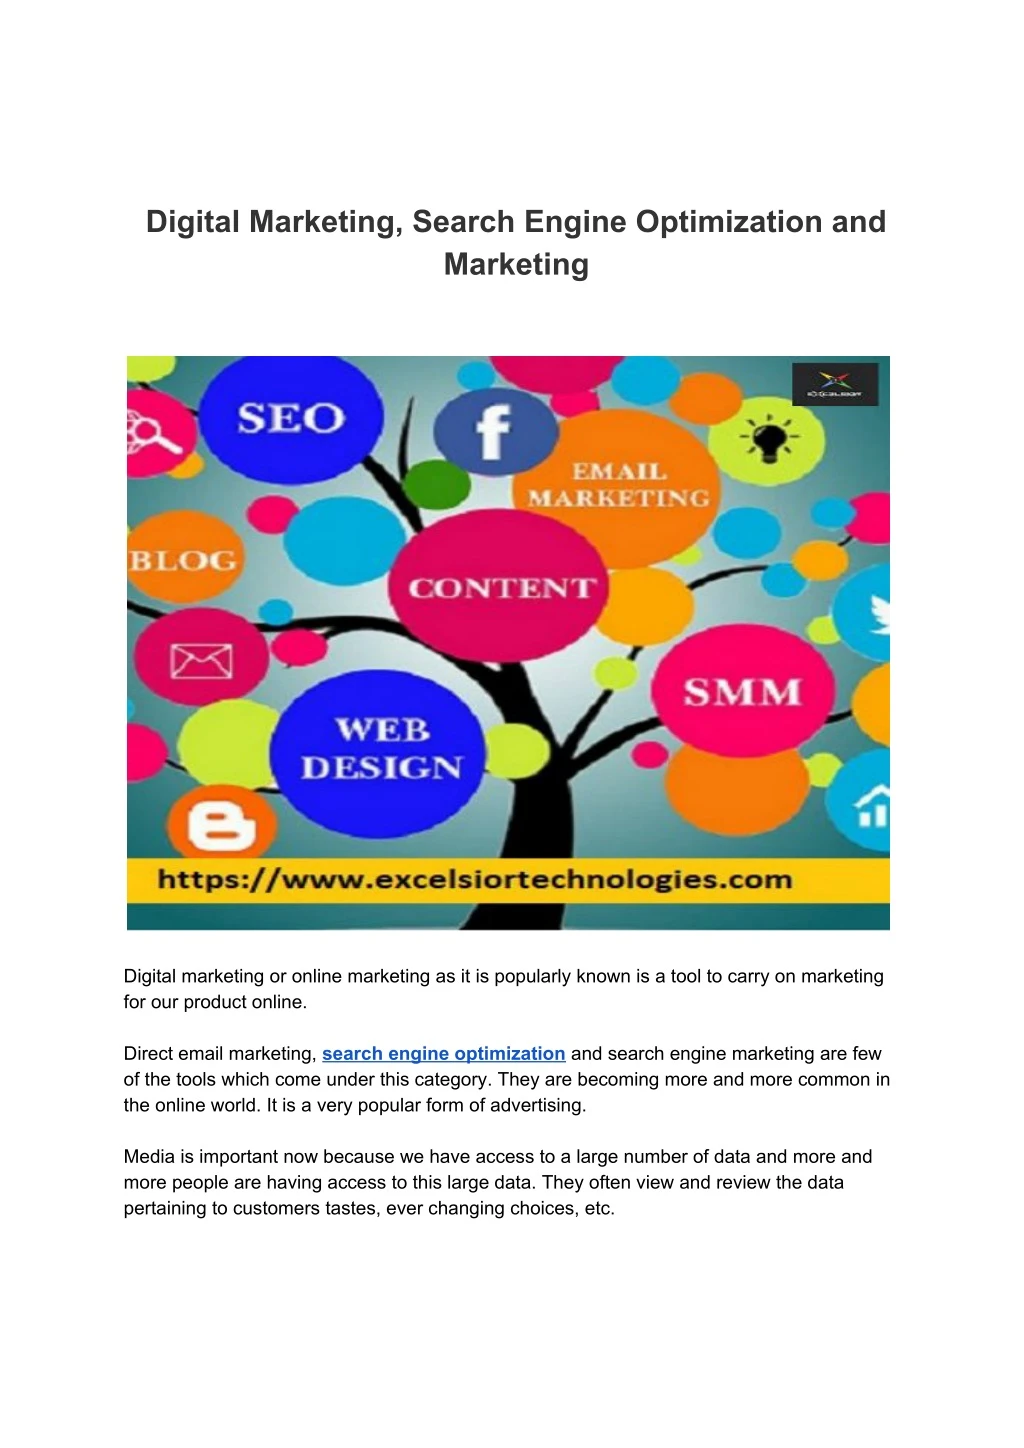 digital marketing search engine optimization